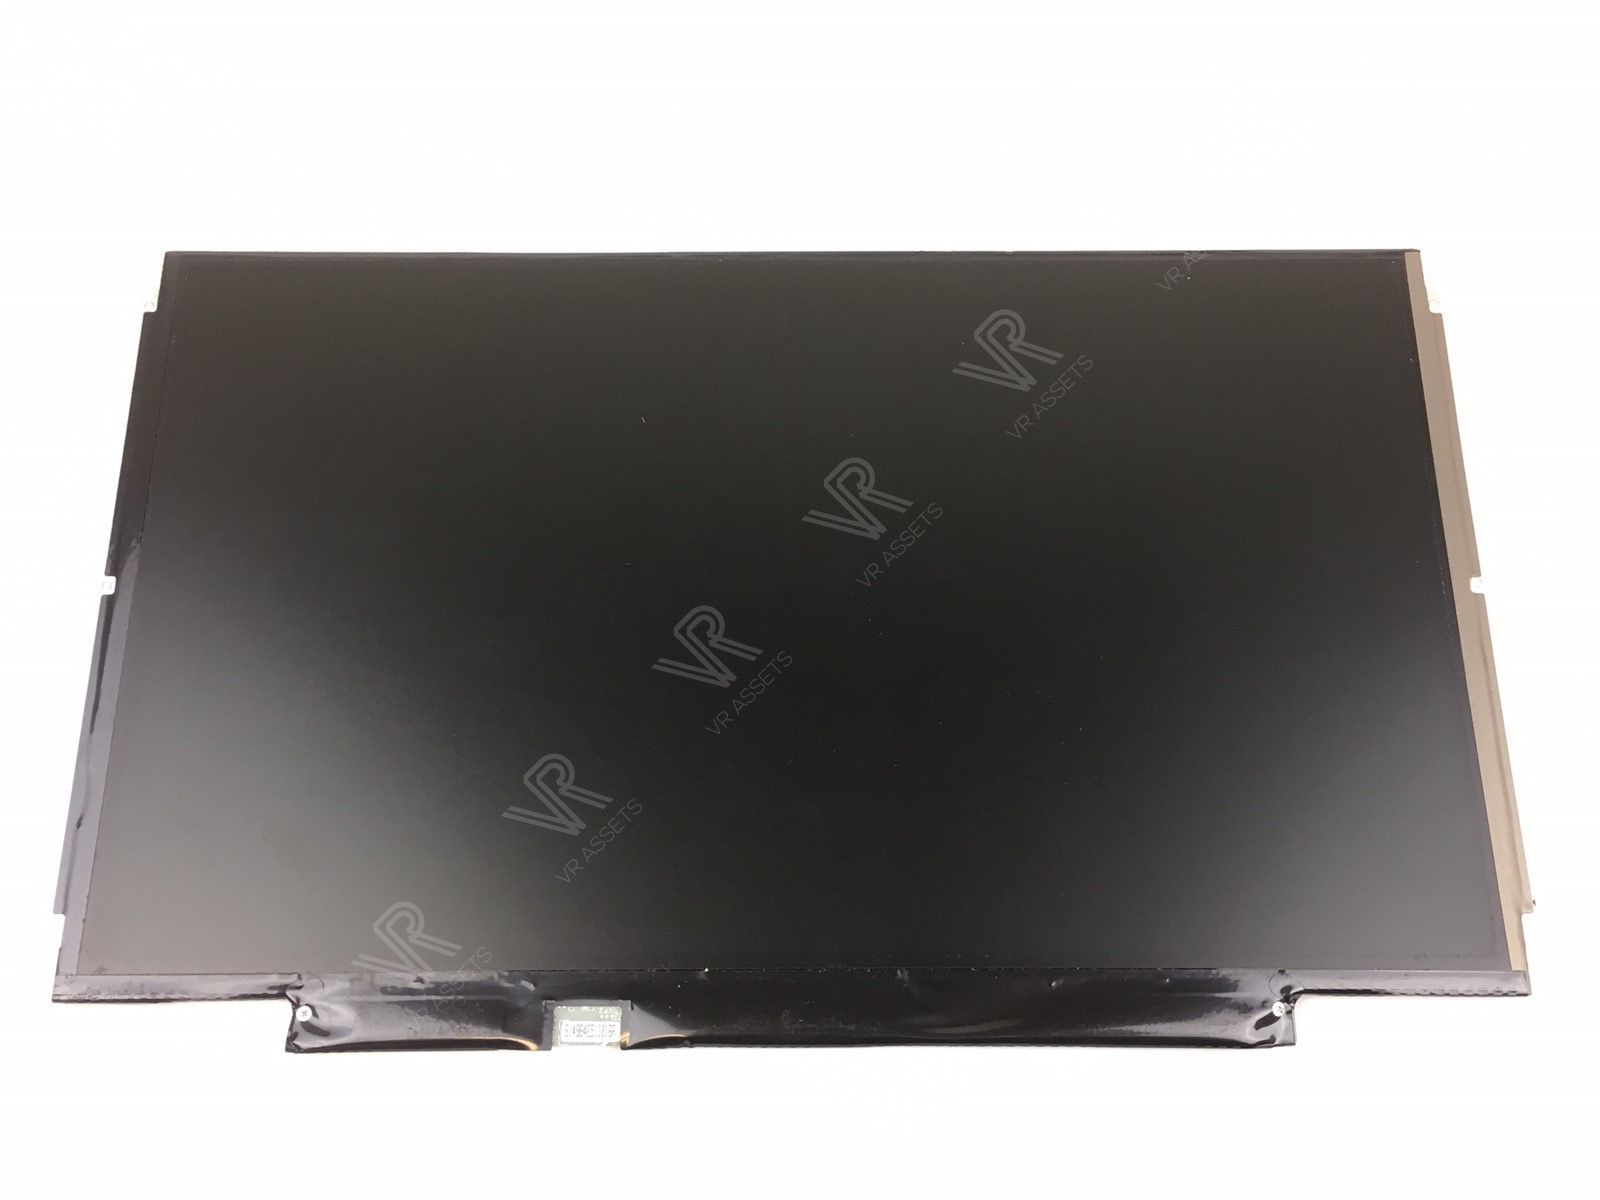 Dell Latitude E6320 Vostro 3300 13.3" LCD Panel Screen XXTNN 0XXTNN TN133AT20